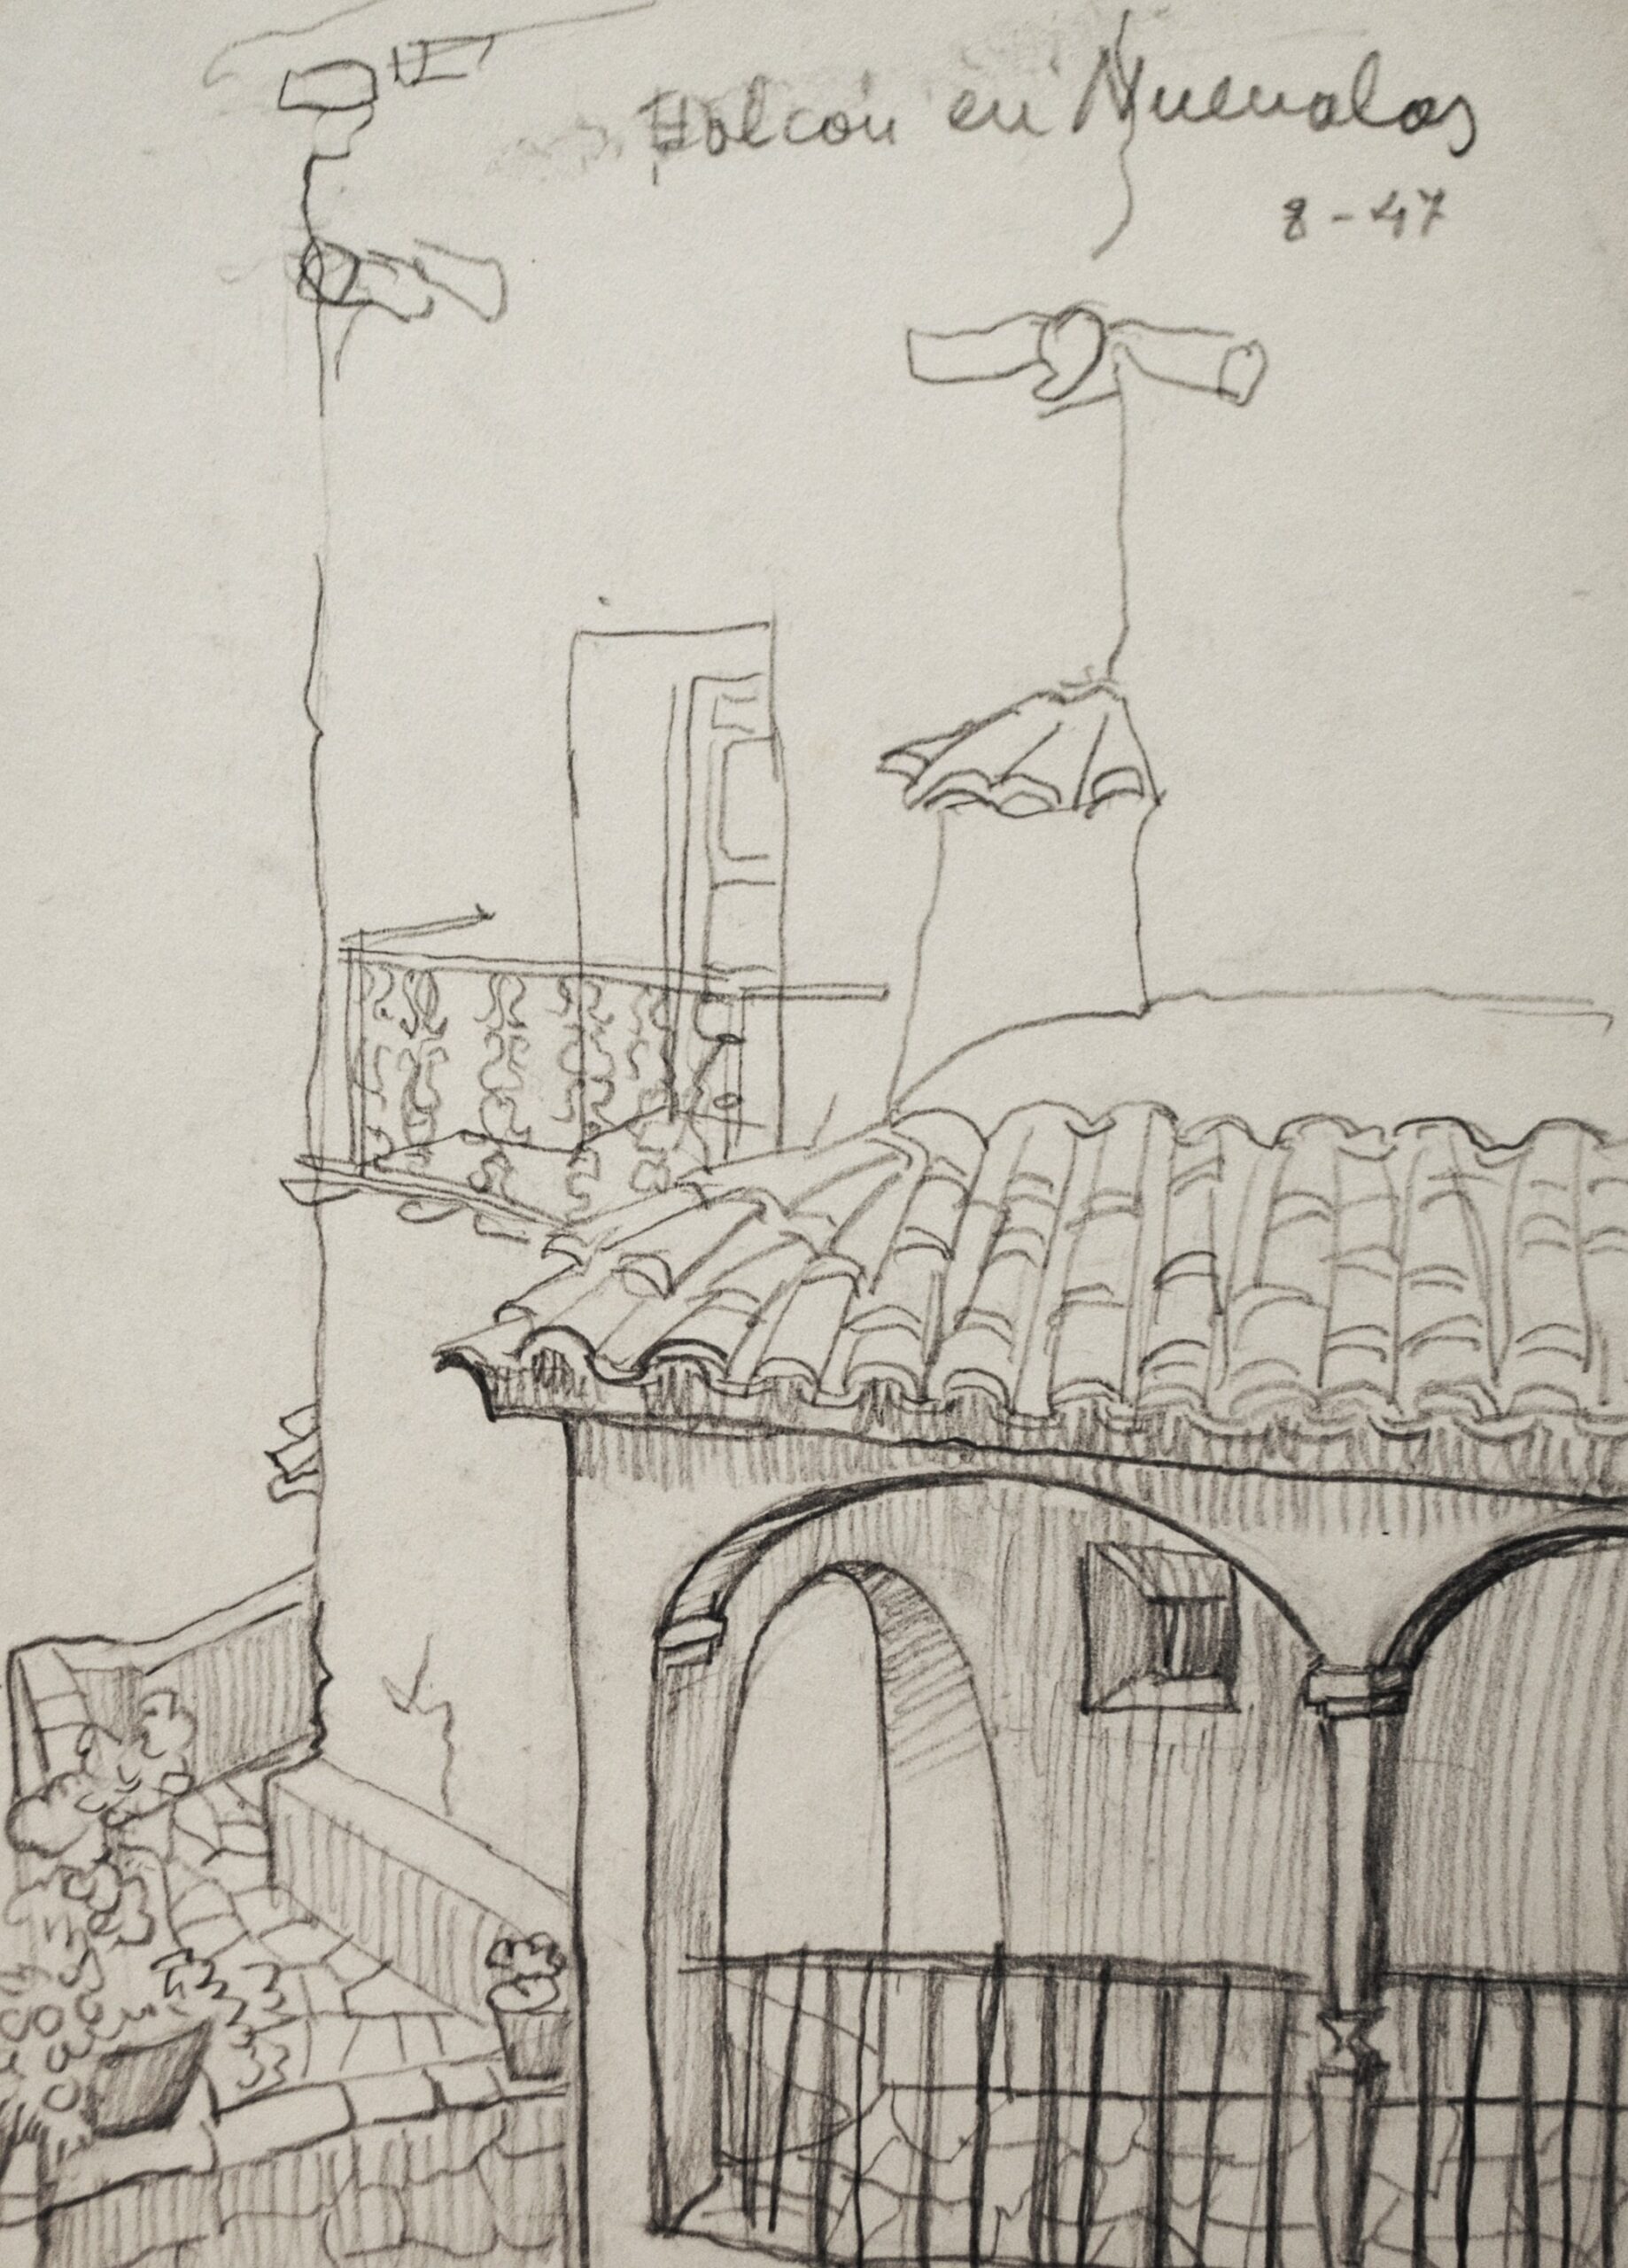 Dibujo de José Manaut titulado Balcón en Nuévalos, Durango, 1944. Lápiz sobre papel.